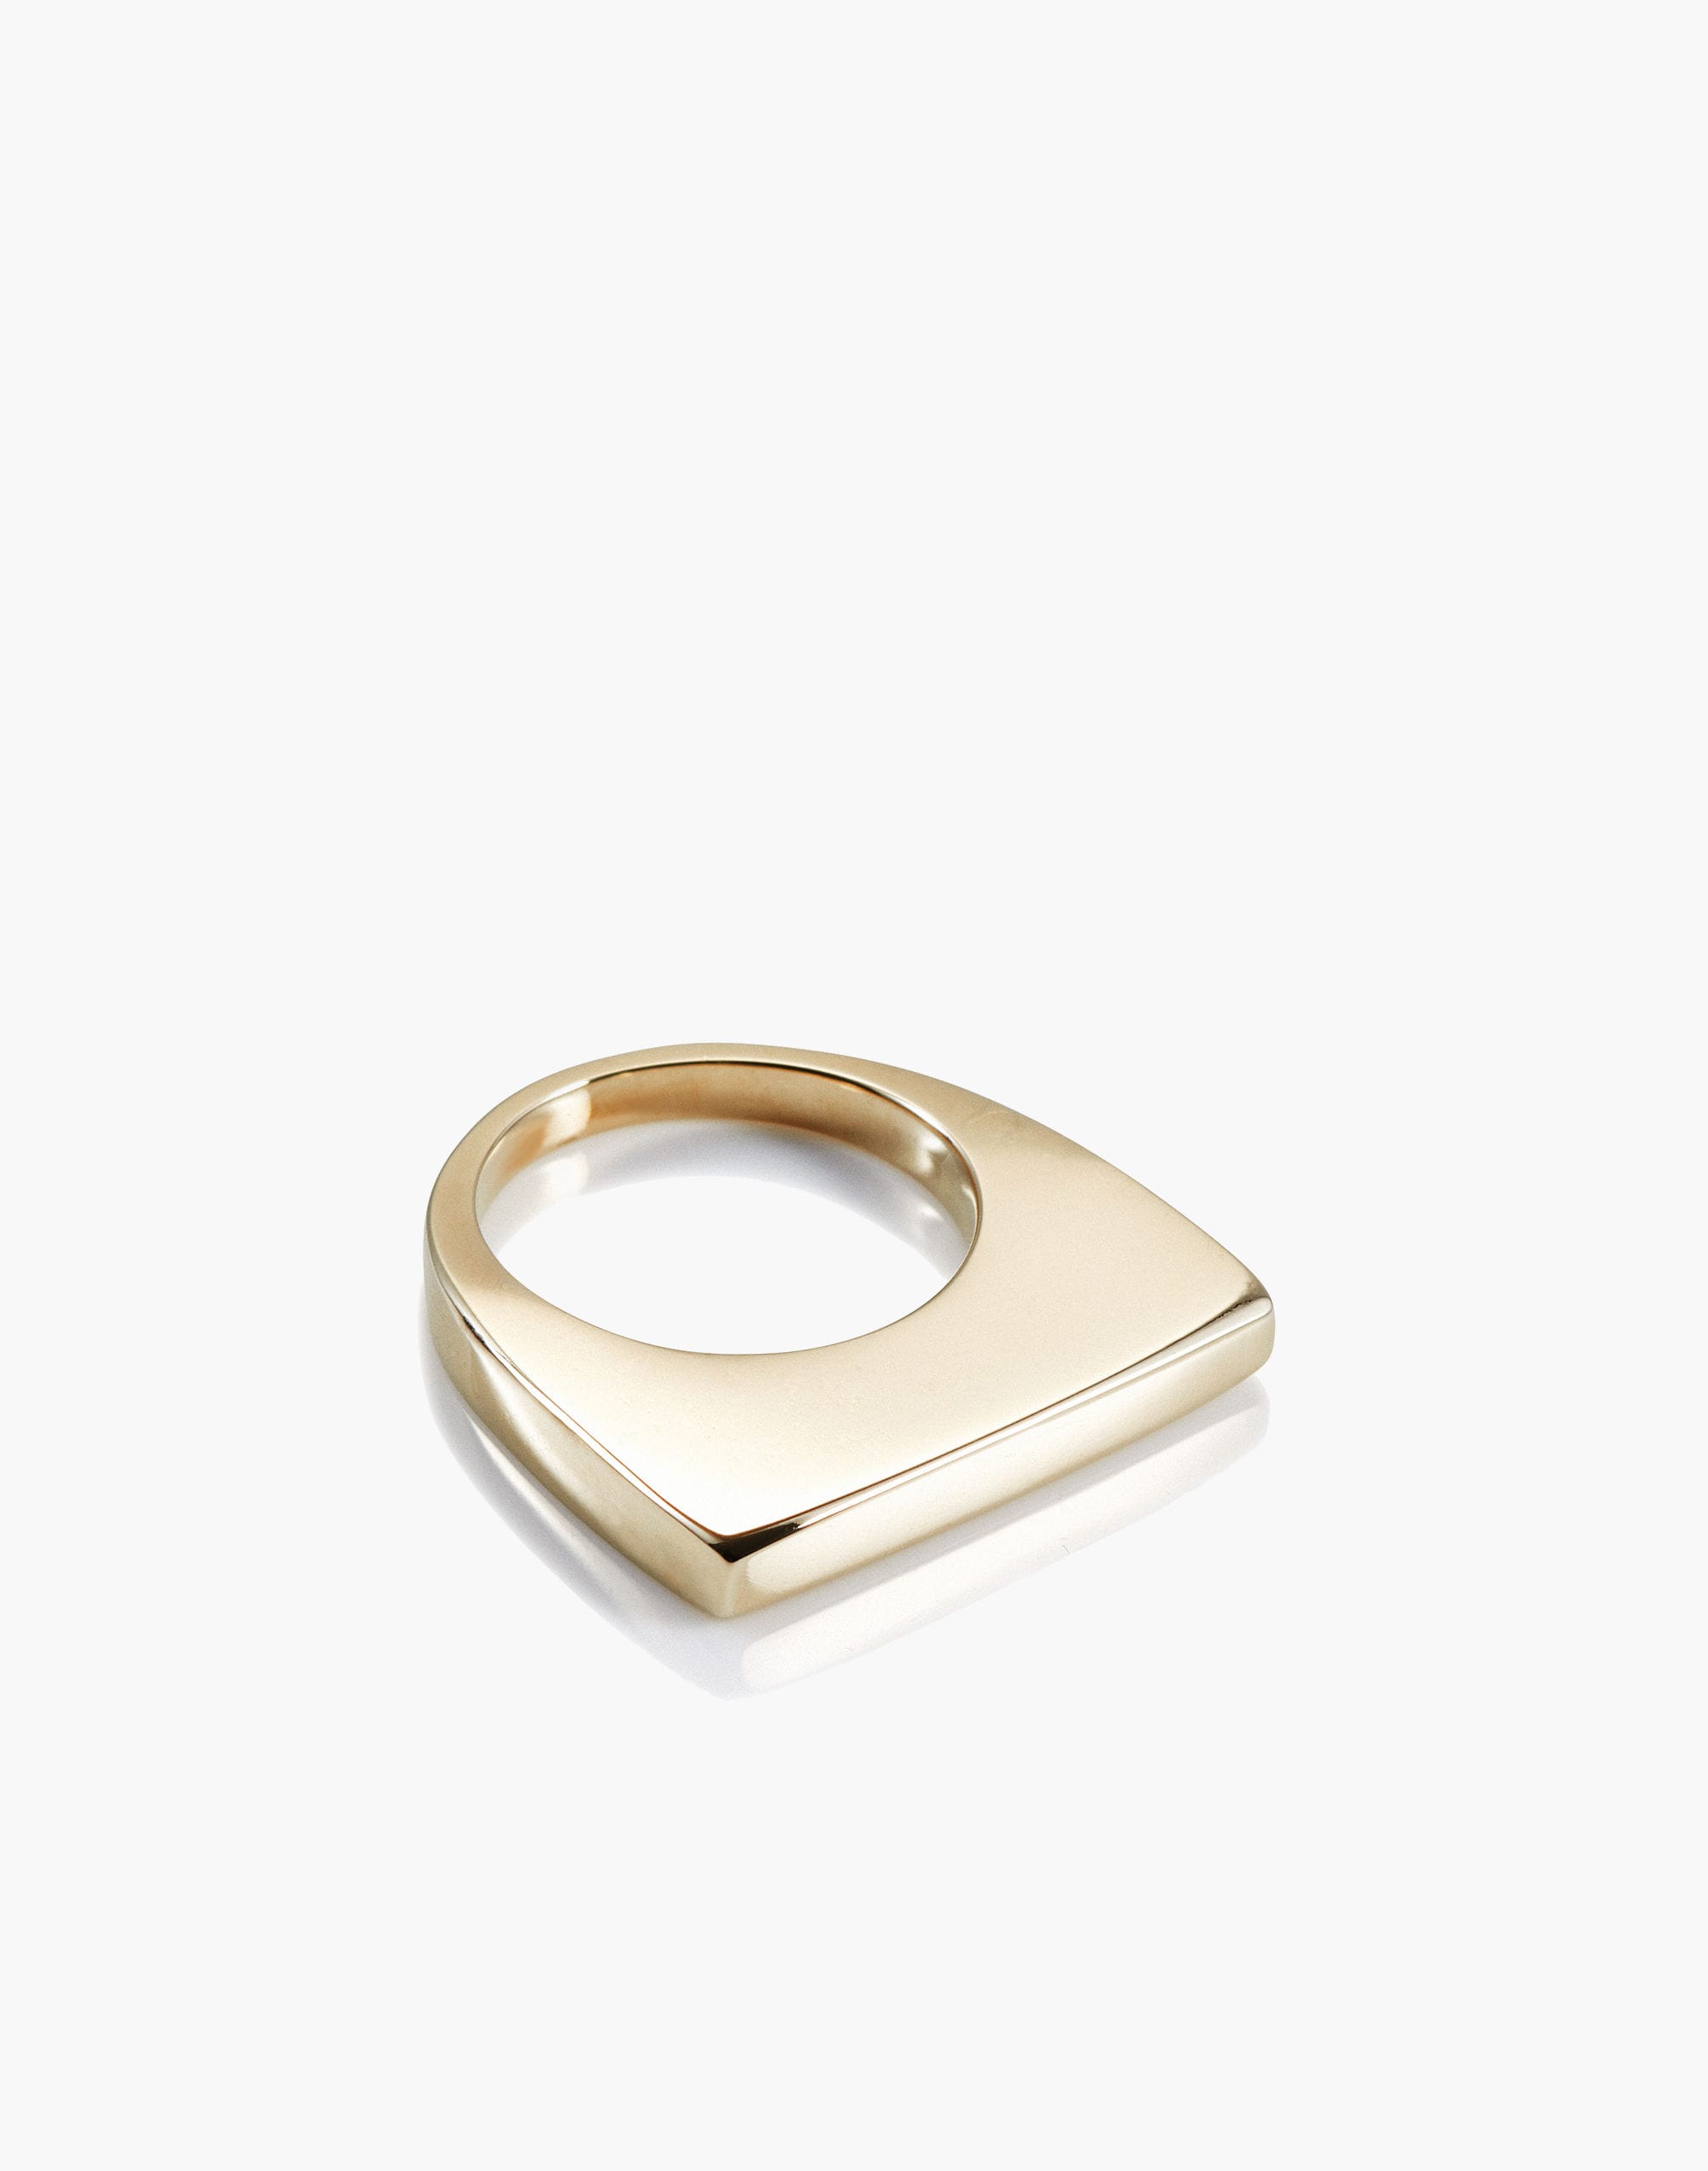 Charlotte Cauwe Studio Flat Square Ring in Brass